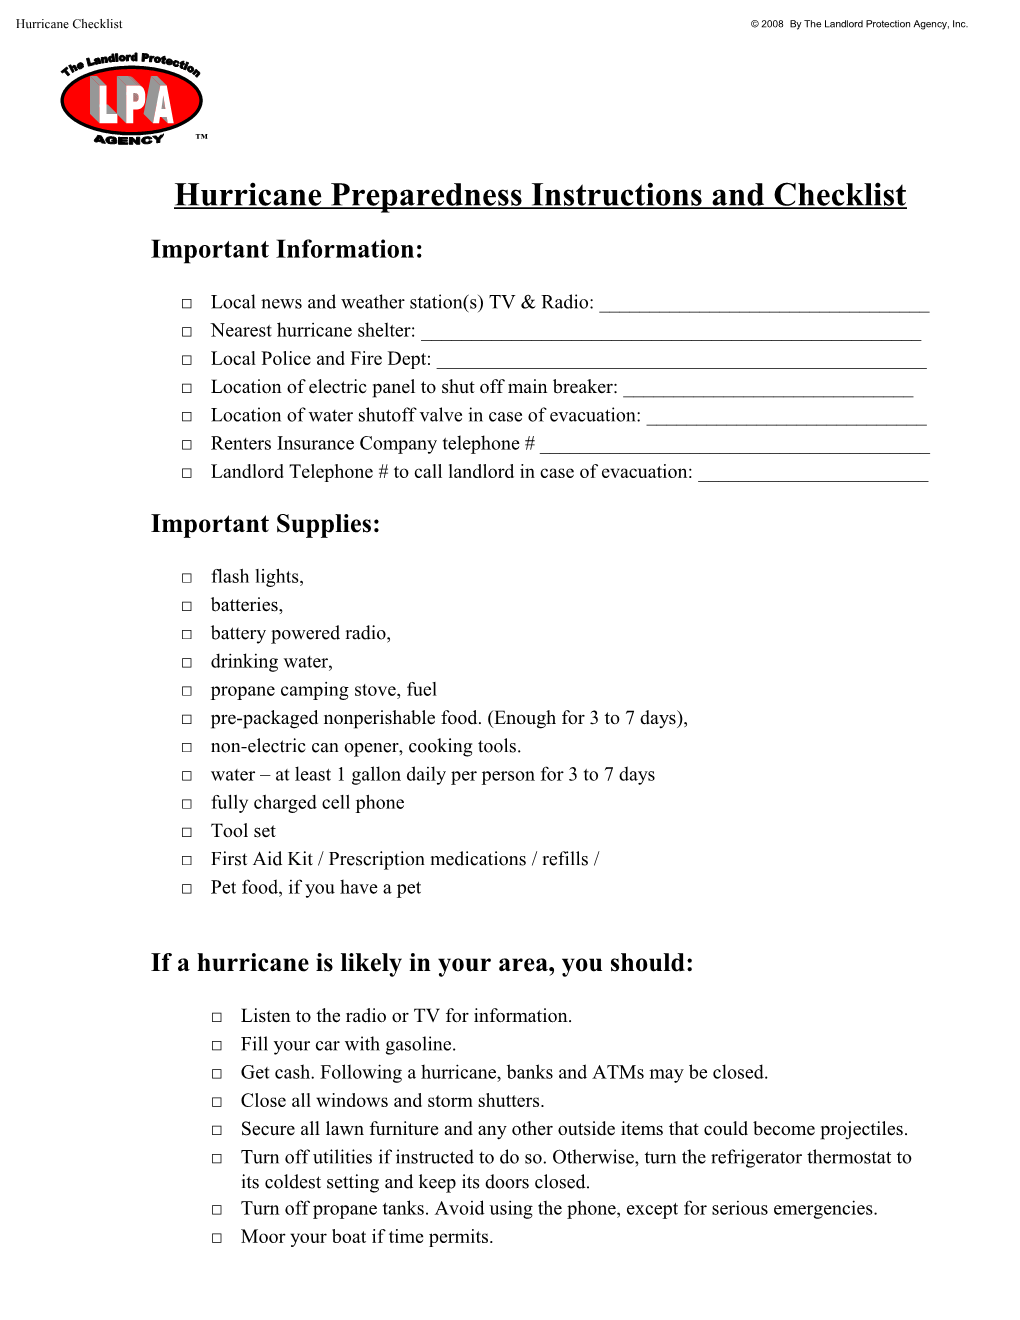 Hurricane Preparedness Instructions and Checklist